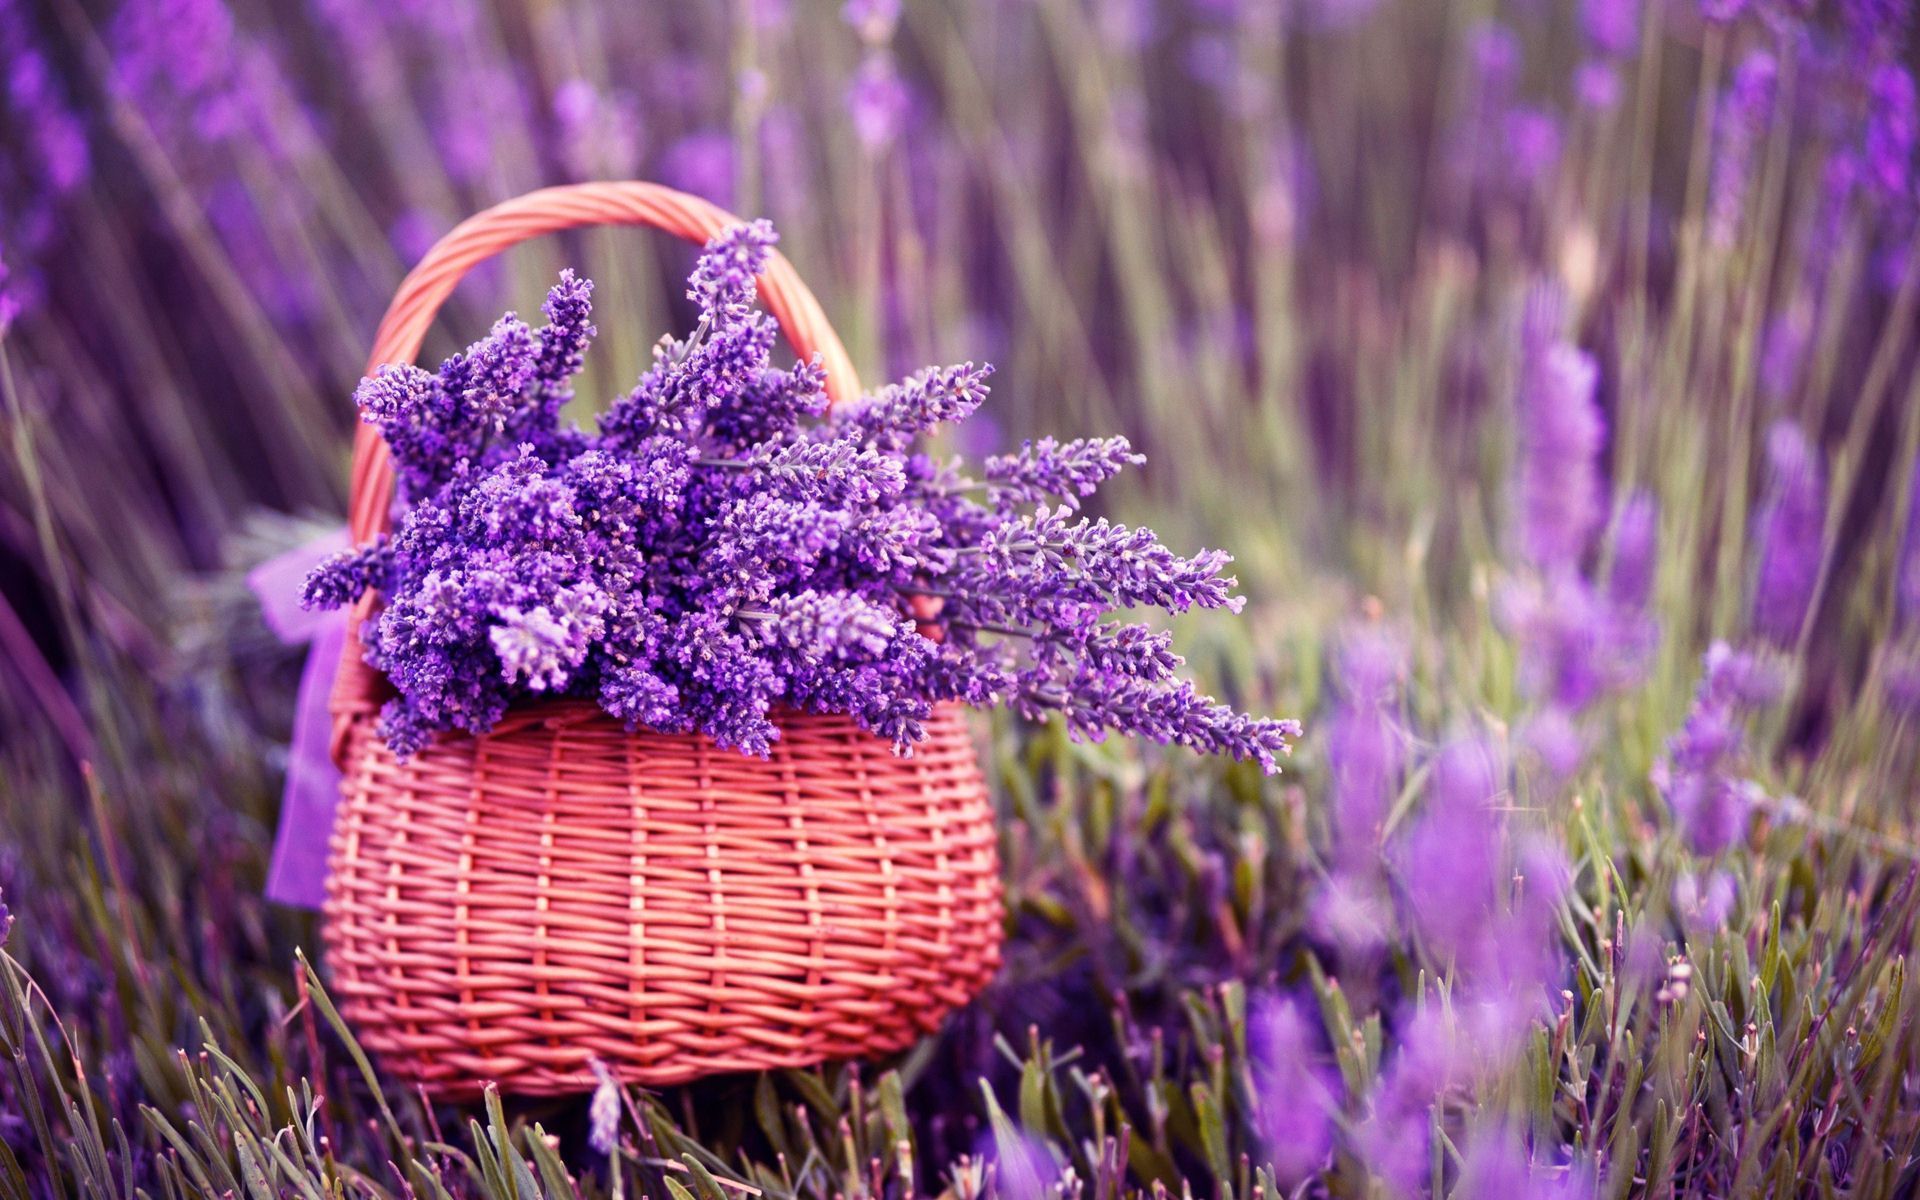 Flores de lavanda púrpura en imágenes de la cesta | HD Wallpapers Images